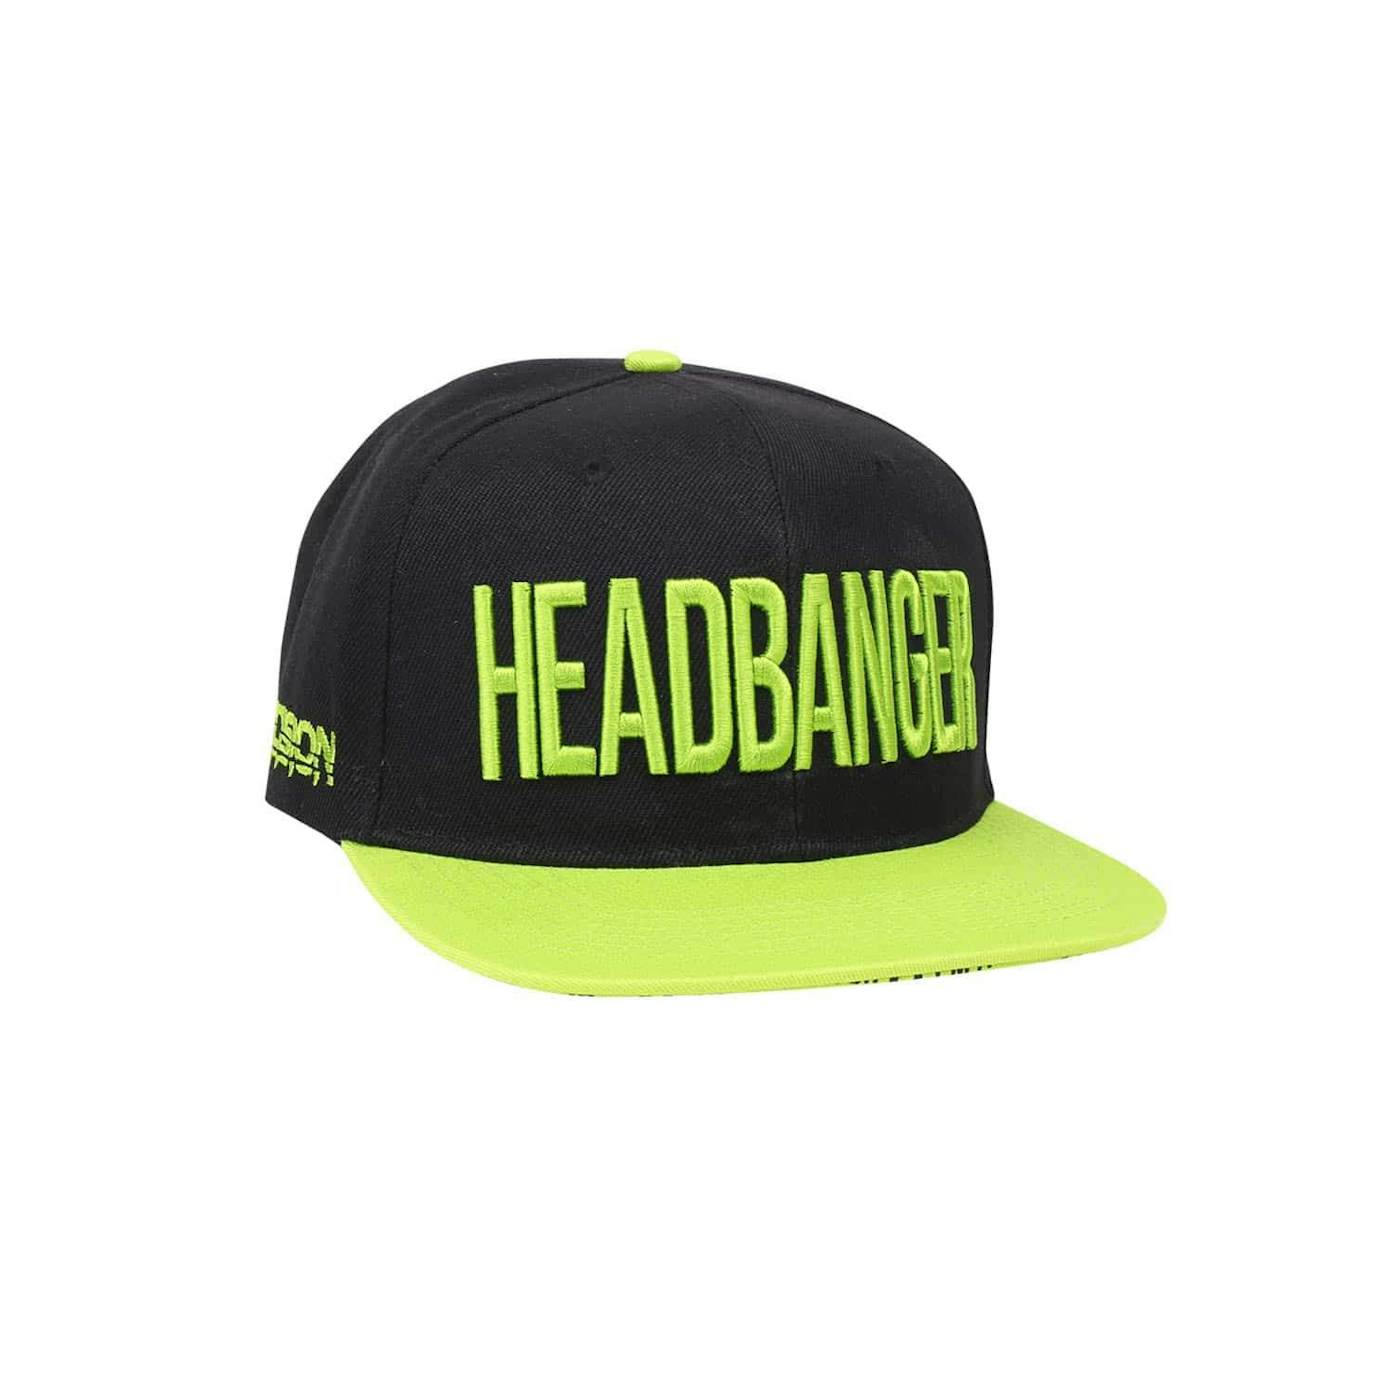 Excision 'Headbanger' Snapback - Black/Neon Green